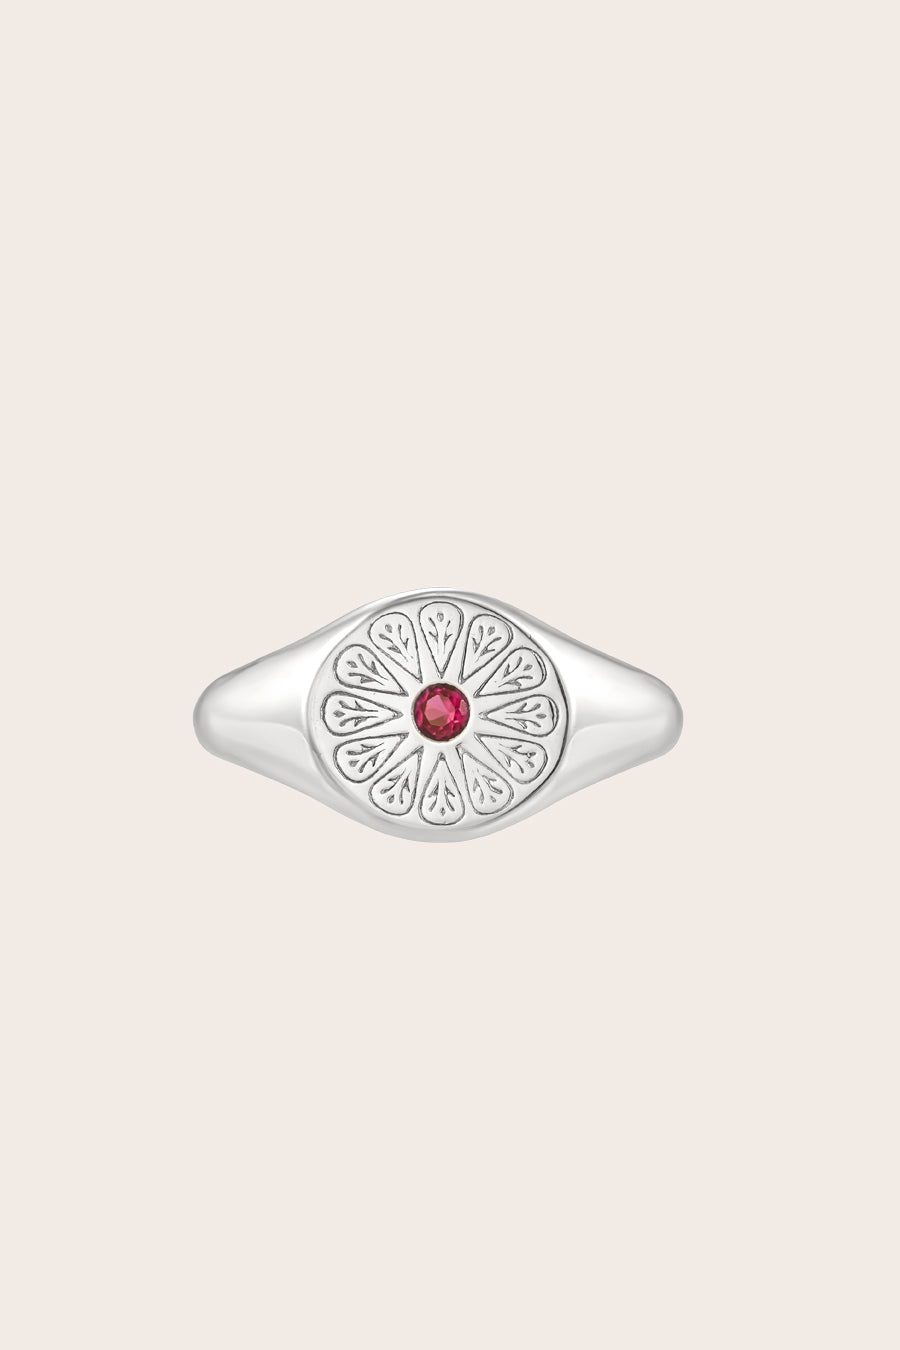 Silver July Ruby Signet Birthstone Ring on cream background